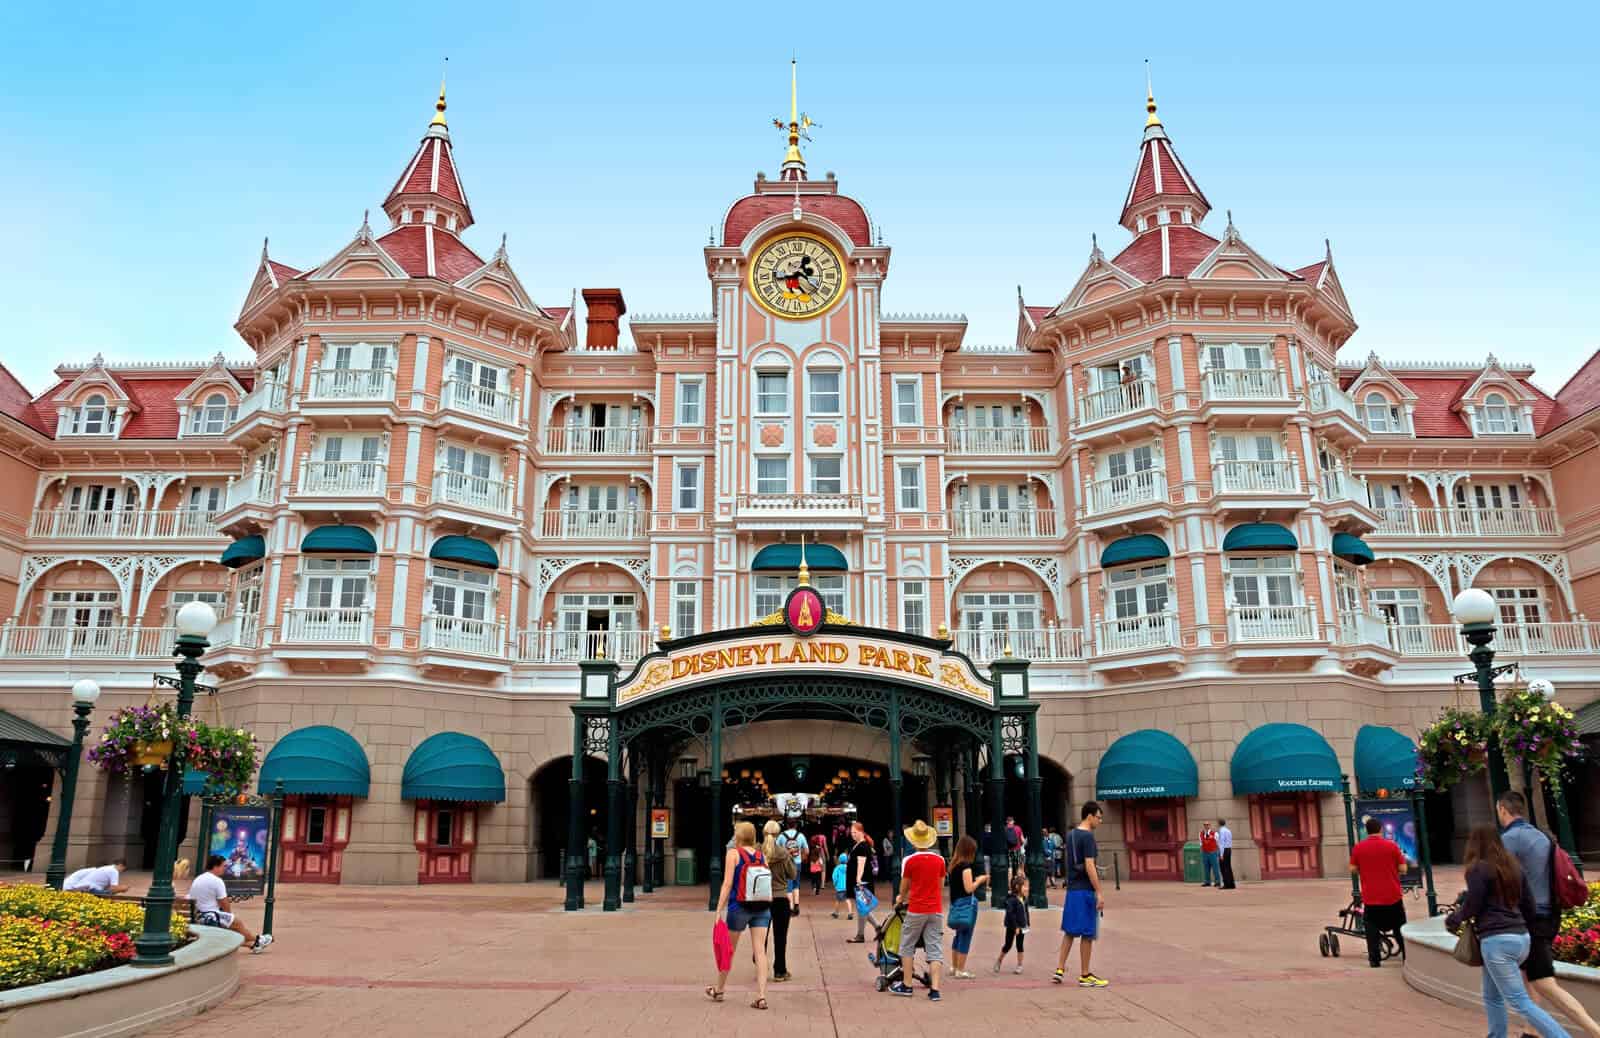 Where to Stay in Disneyland Paris - the Disneyland Paris hotel